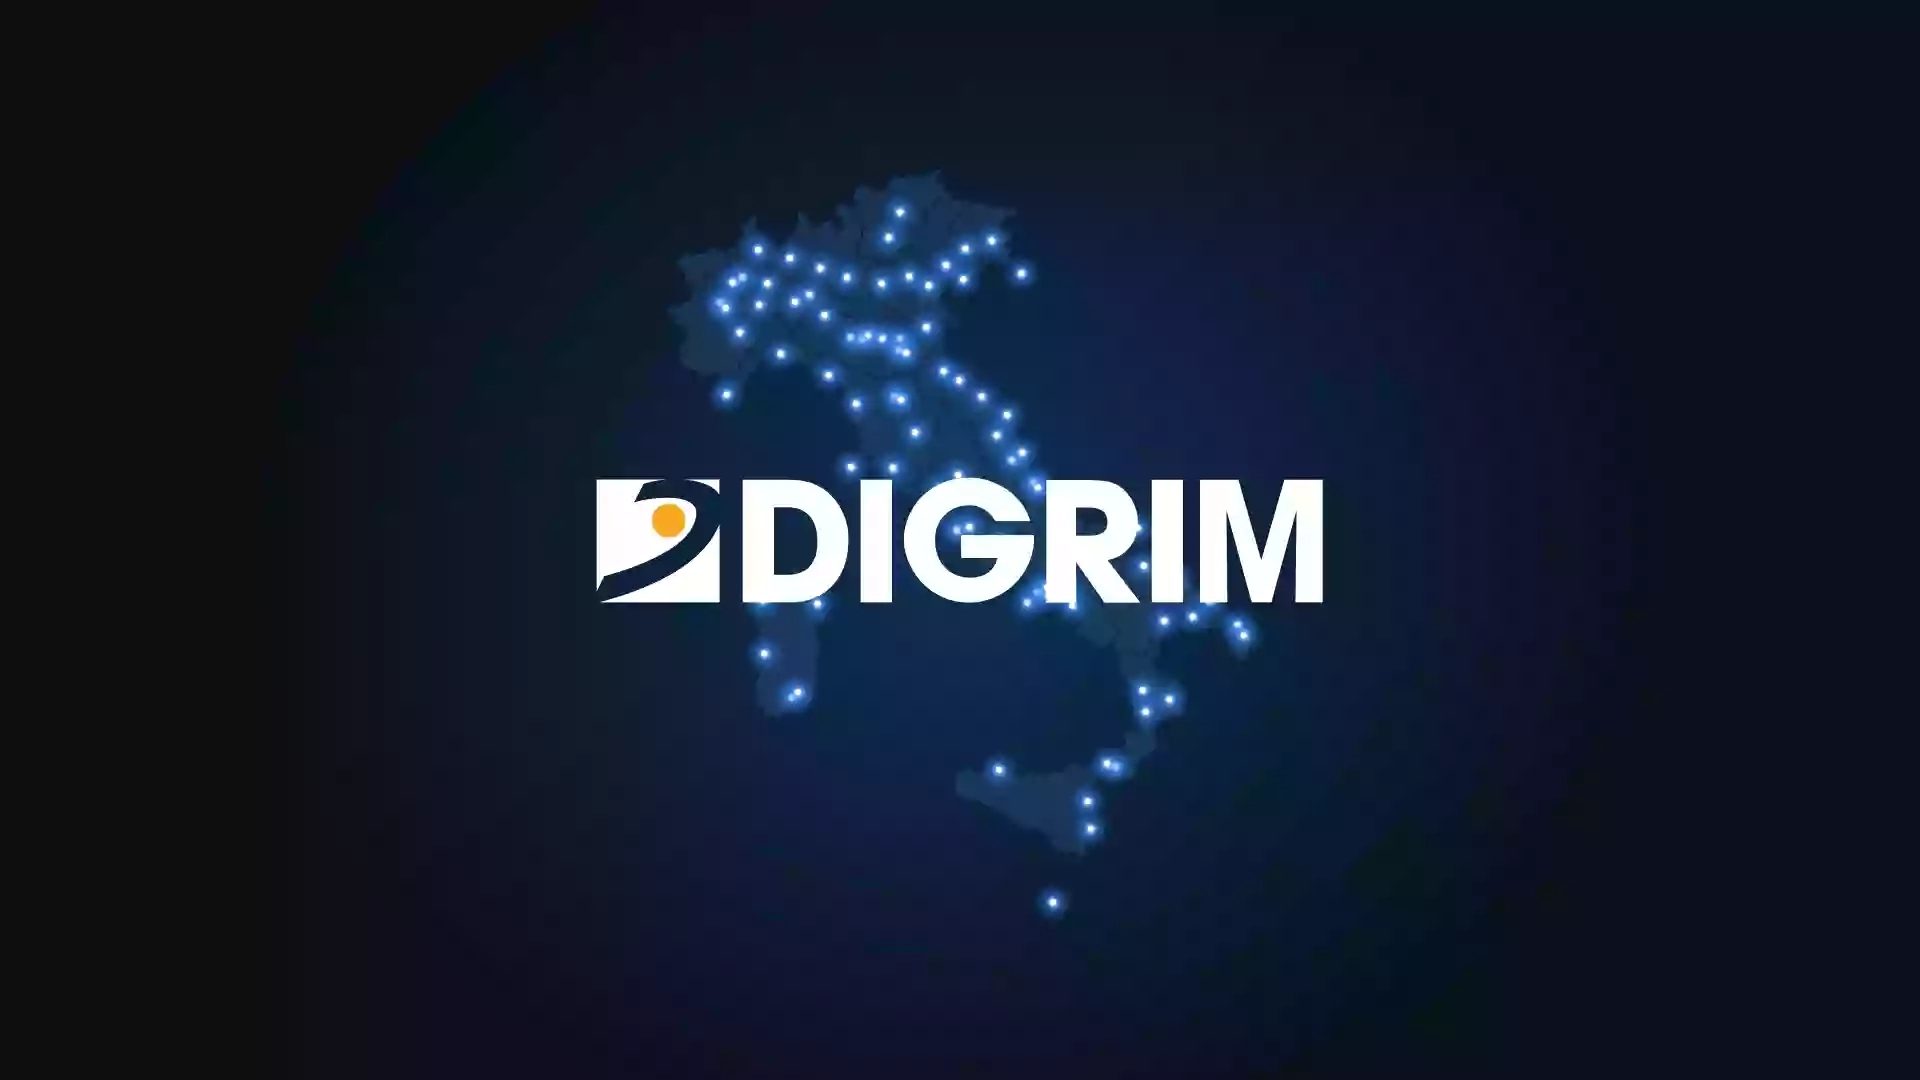 Digrim (Soc.Coop.)